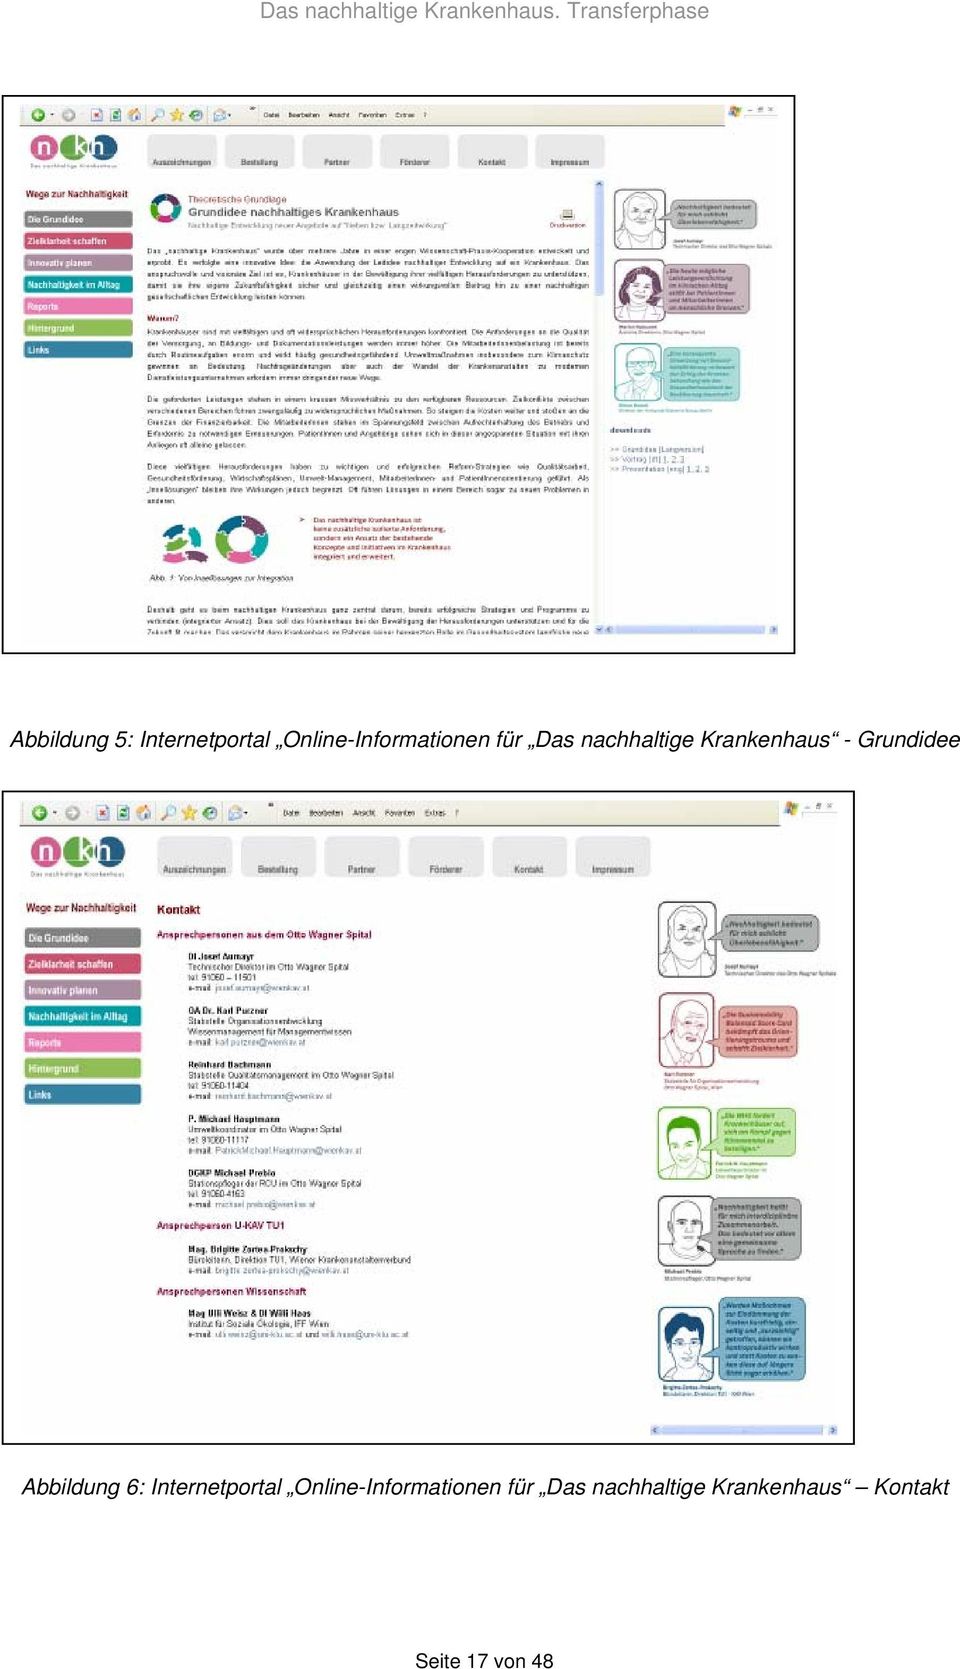 Abbildung 6: Internetportal Online-Informationen